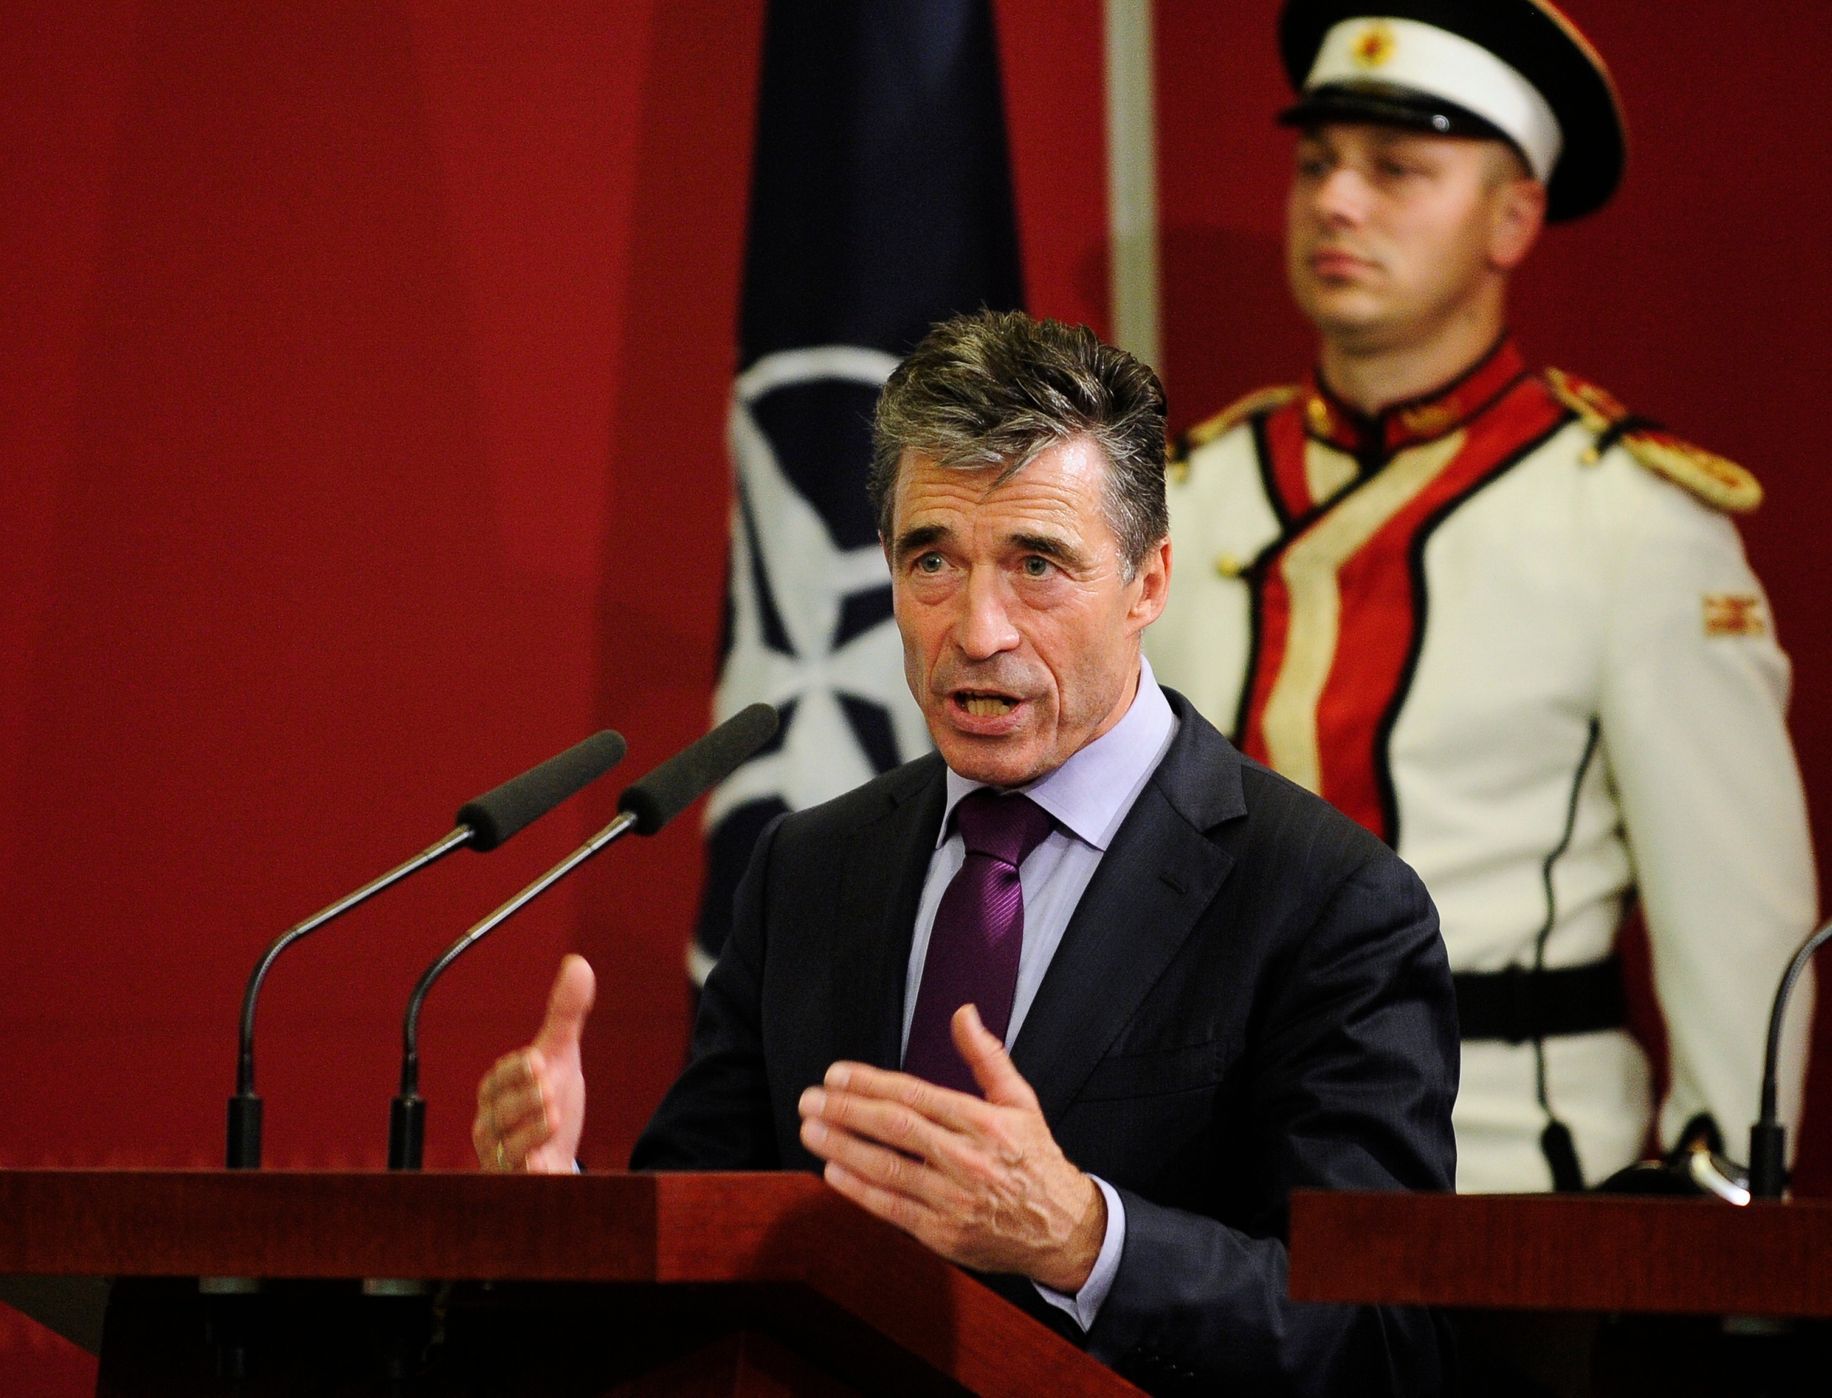 NATO Secretary-General Anders Rasmussen gestures during a news conference in Skopje